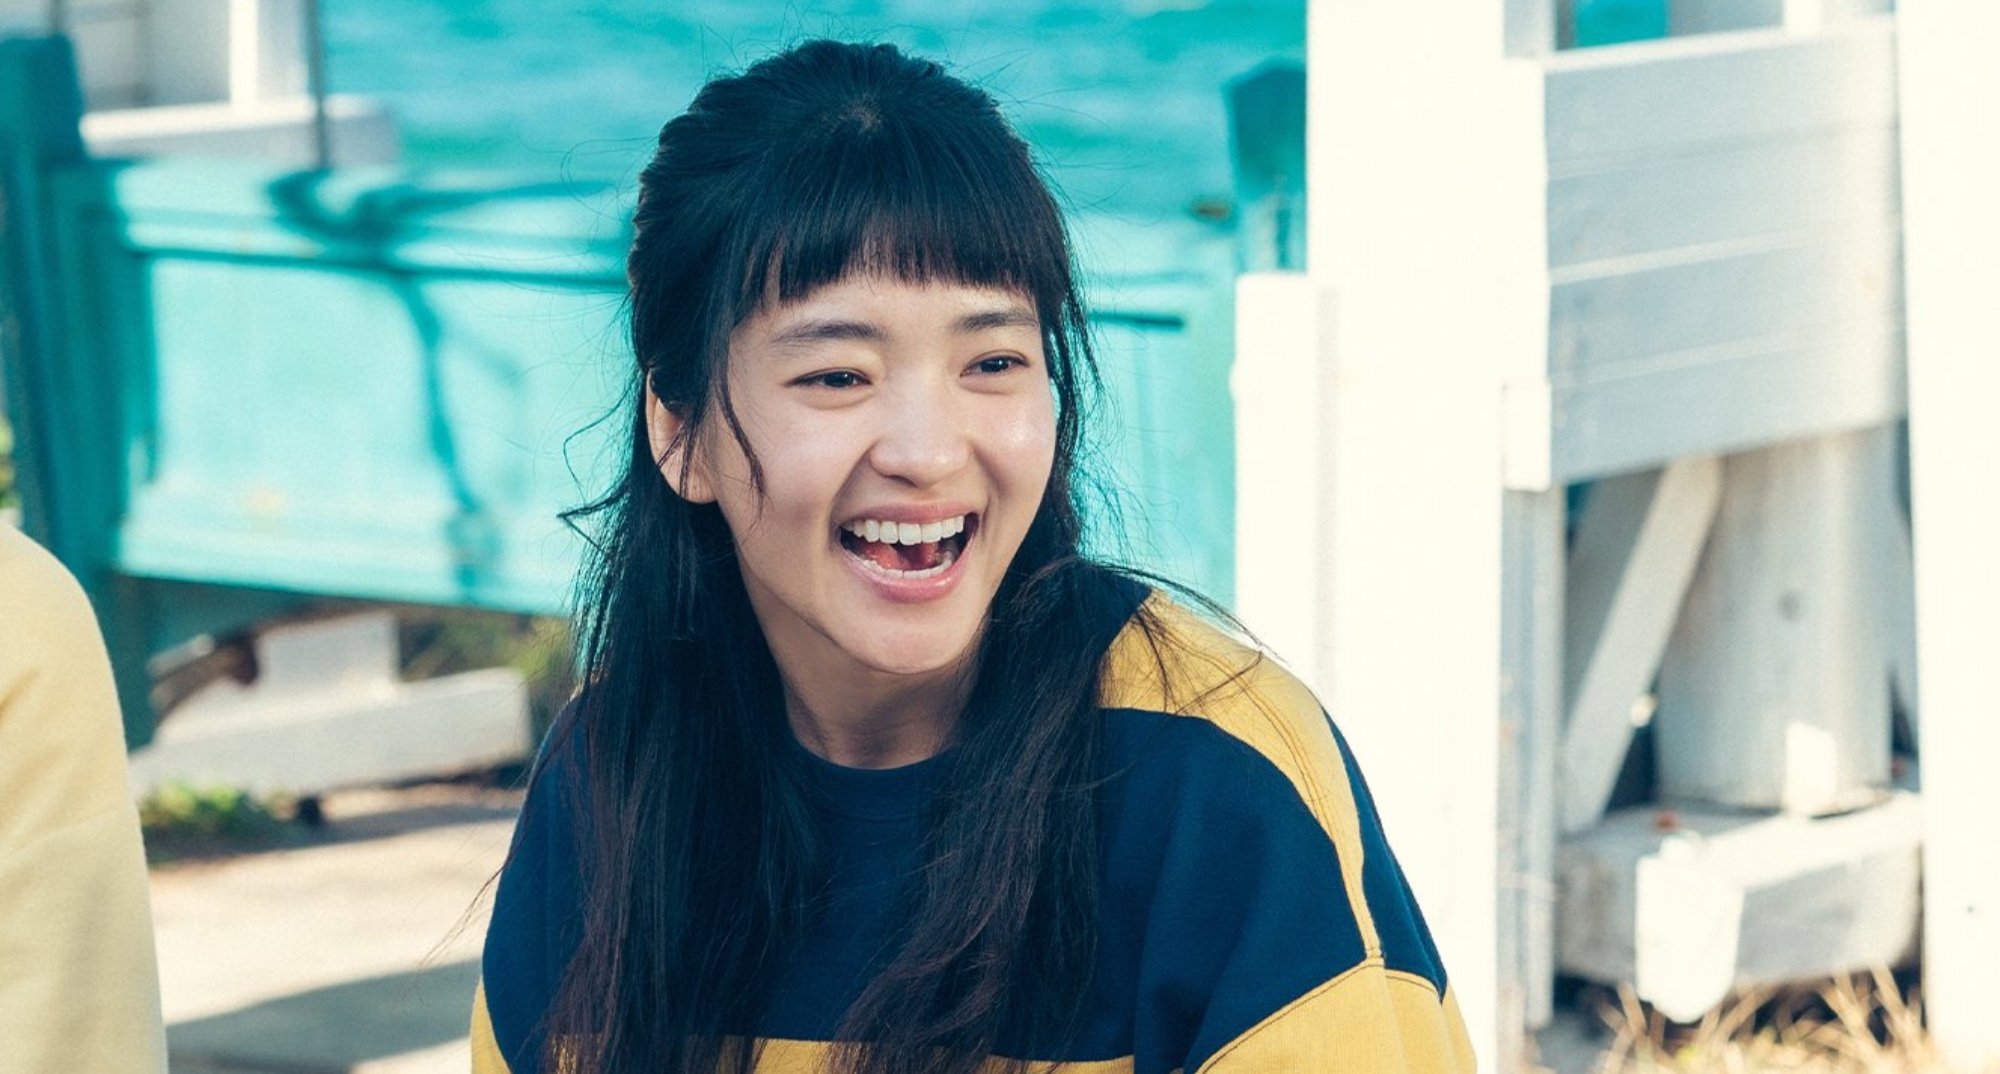 Kim Tae-ri as Hee-do in 'Twenty-Five Twenty-One' laughing wearing stripped shirt.